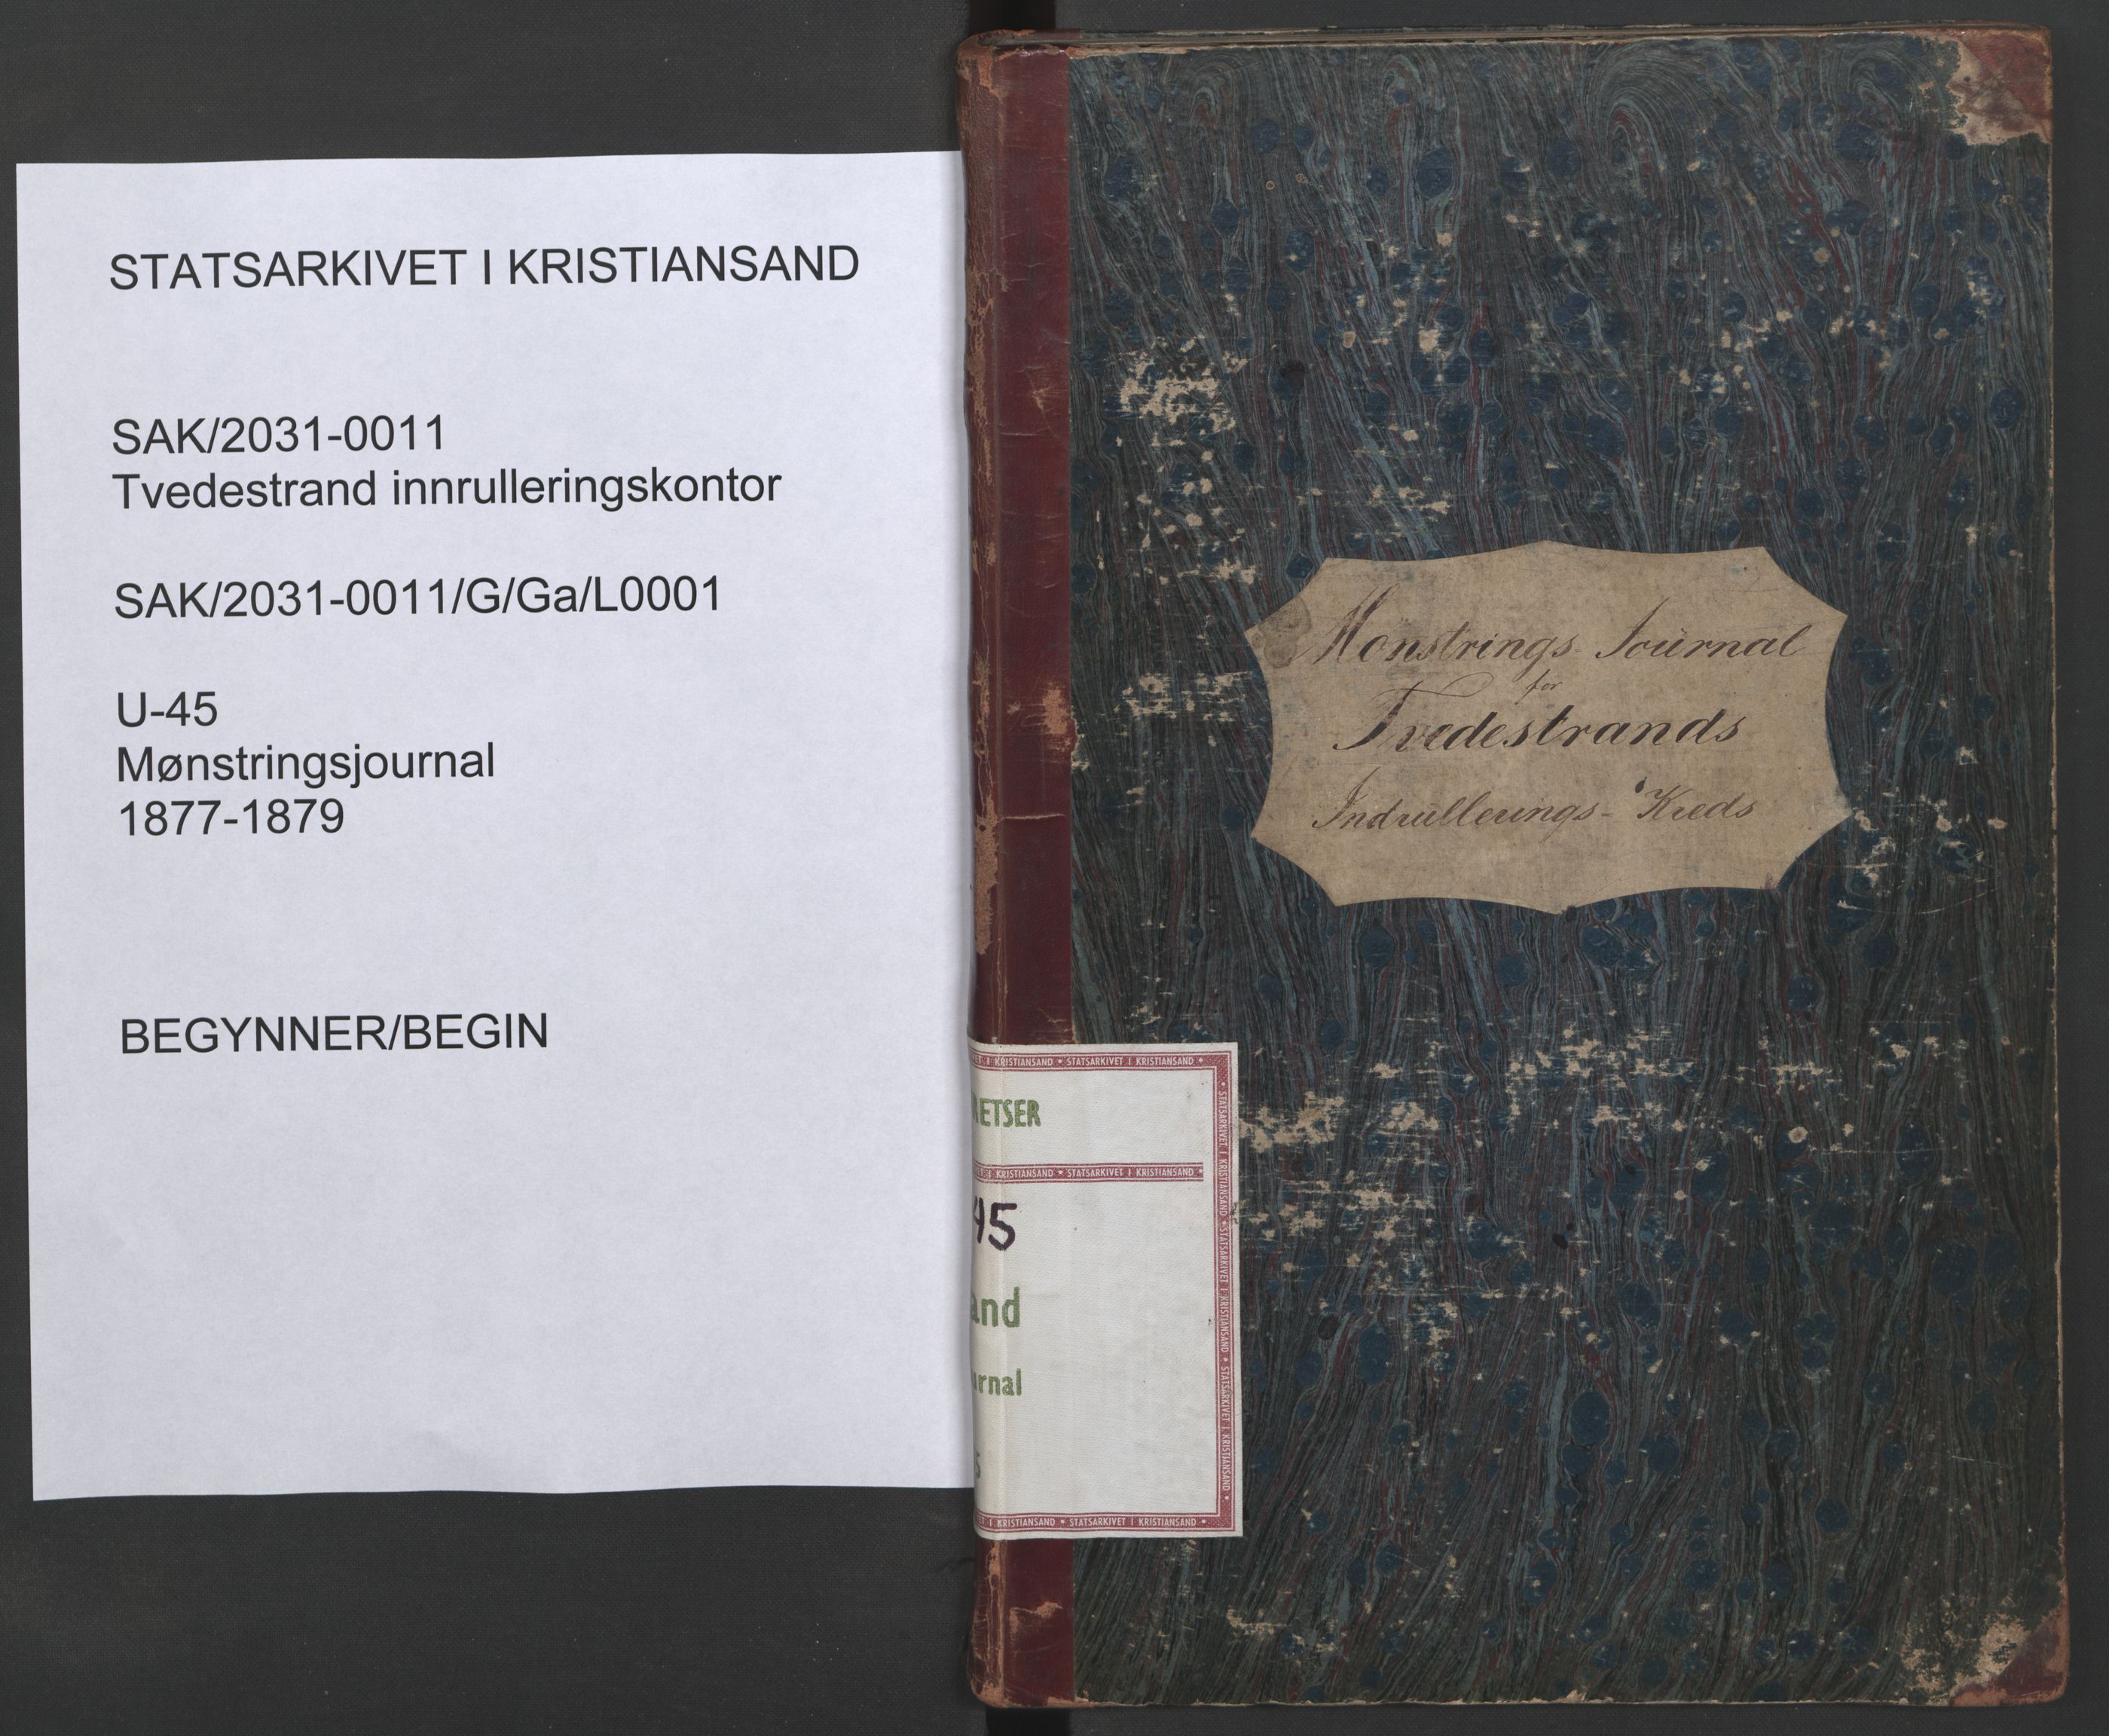 Tvedestrand mønstringskrets, SAK/2031-0011/G/Ga/L0001: Mønstringsjournal, U-45, 1860-1875, p. 1